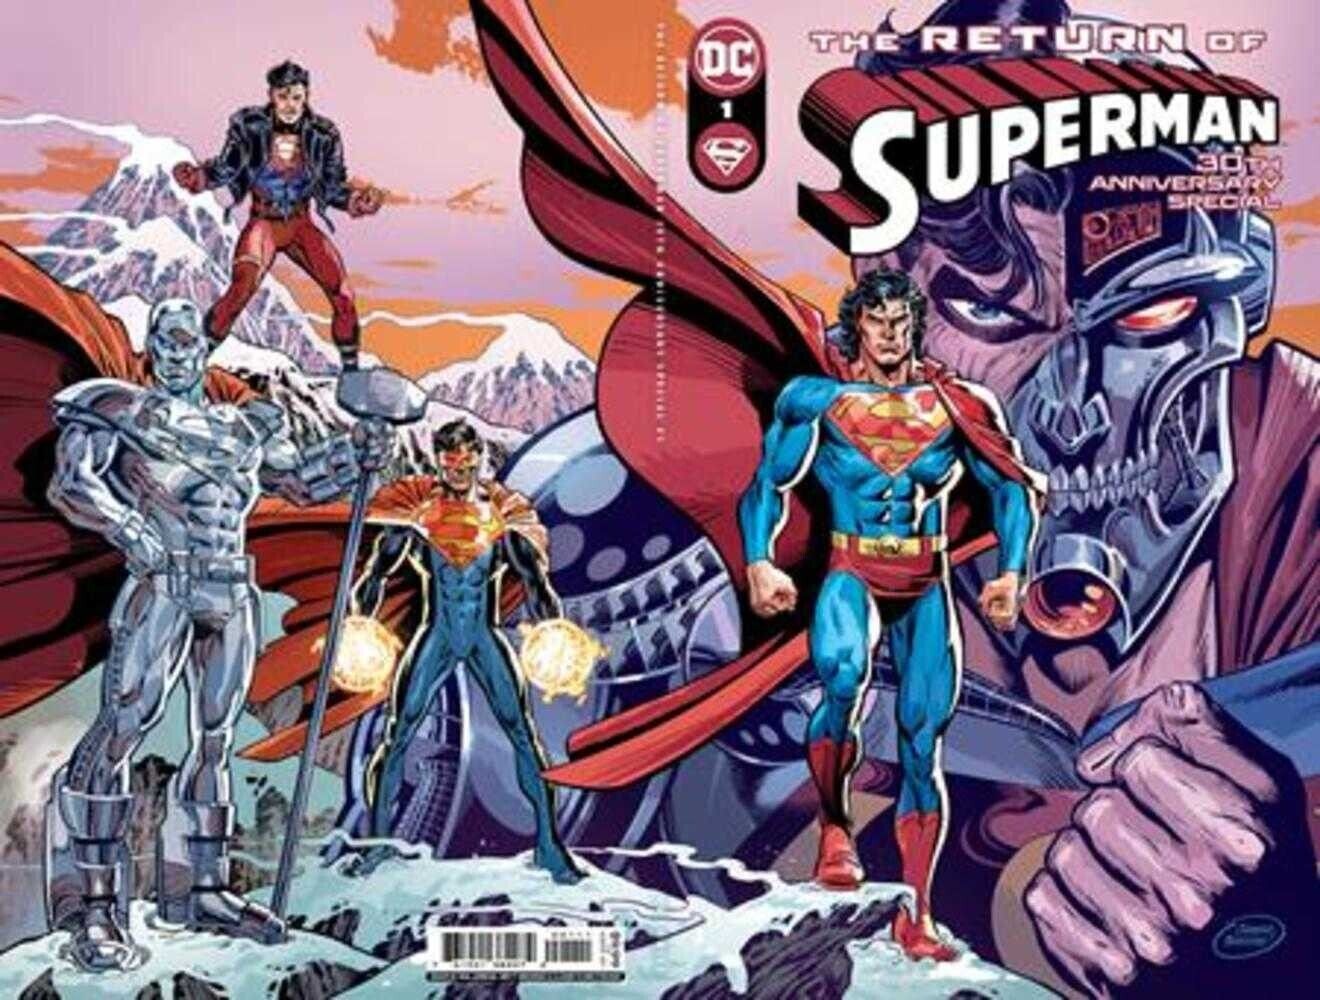 Return Of Superman 30th Anniversary Special #1 (One Shot) Cover A Dan Jurgens Wr